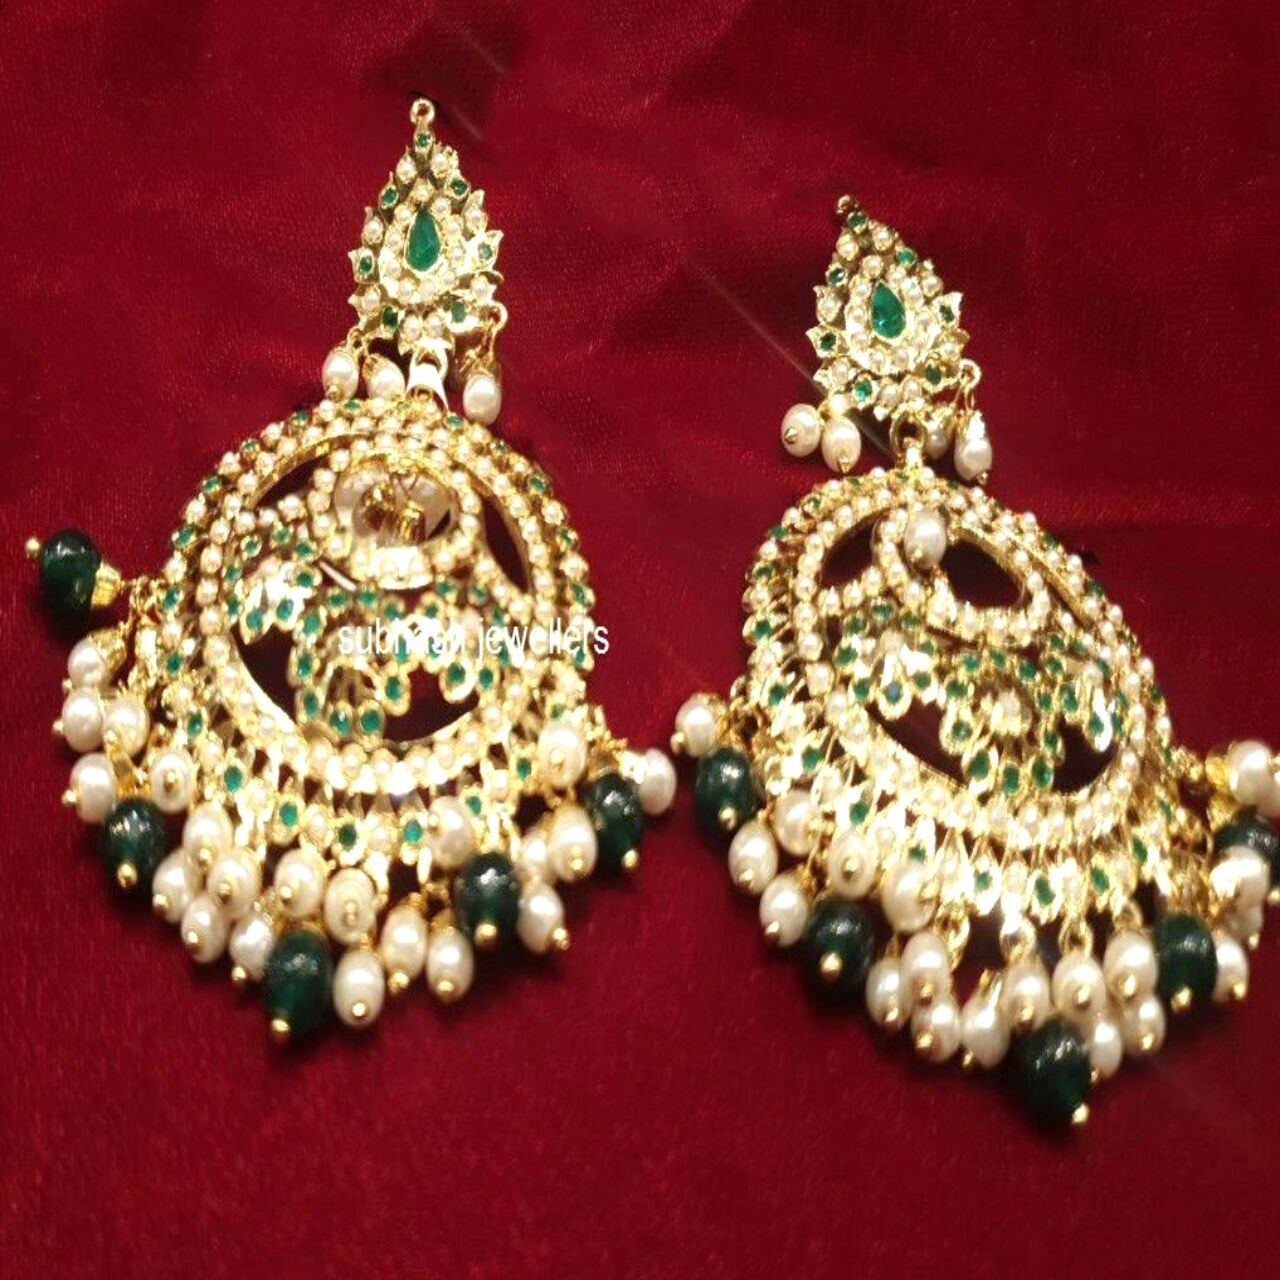 Punjabi jadao earring